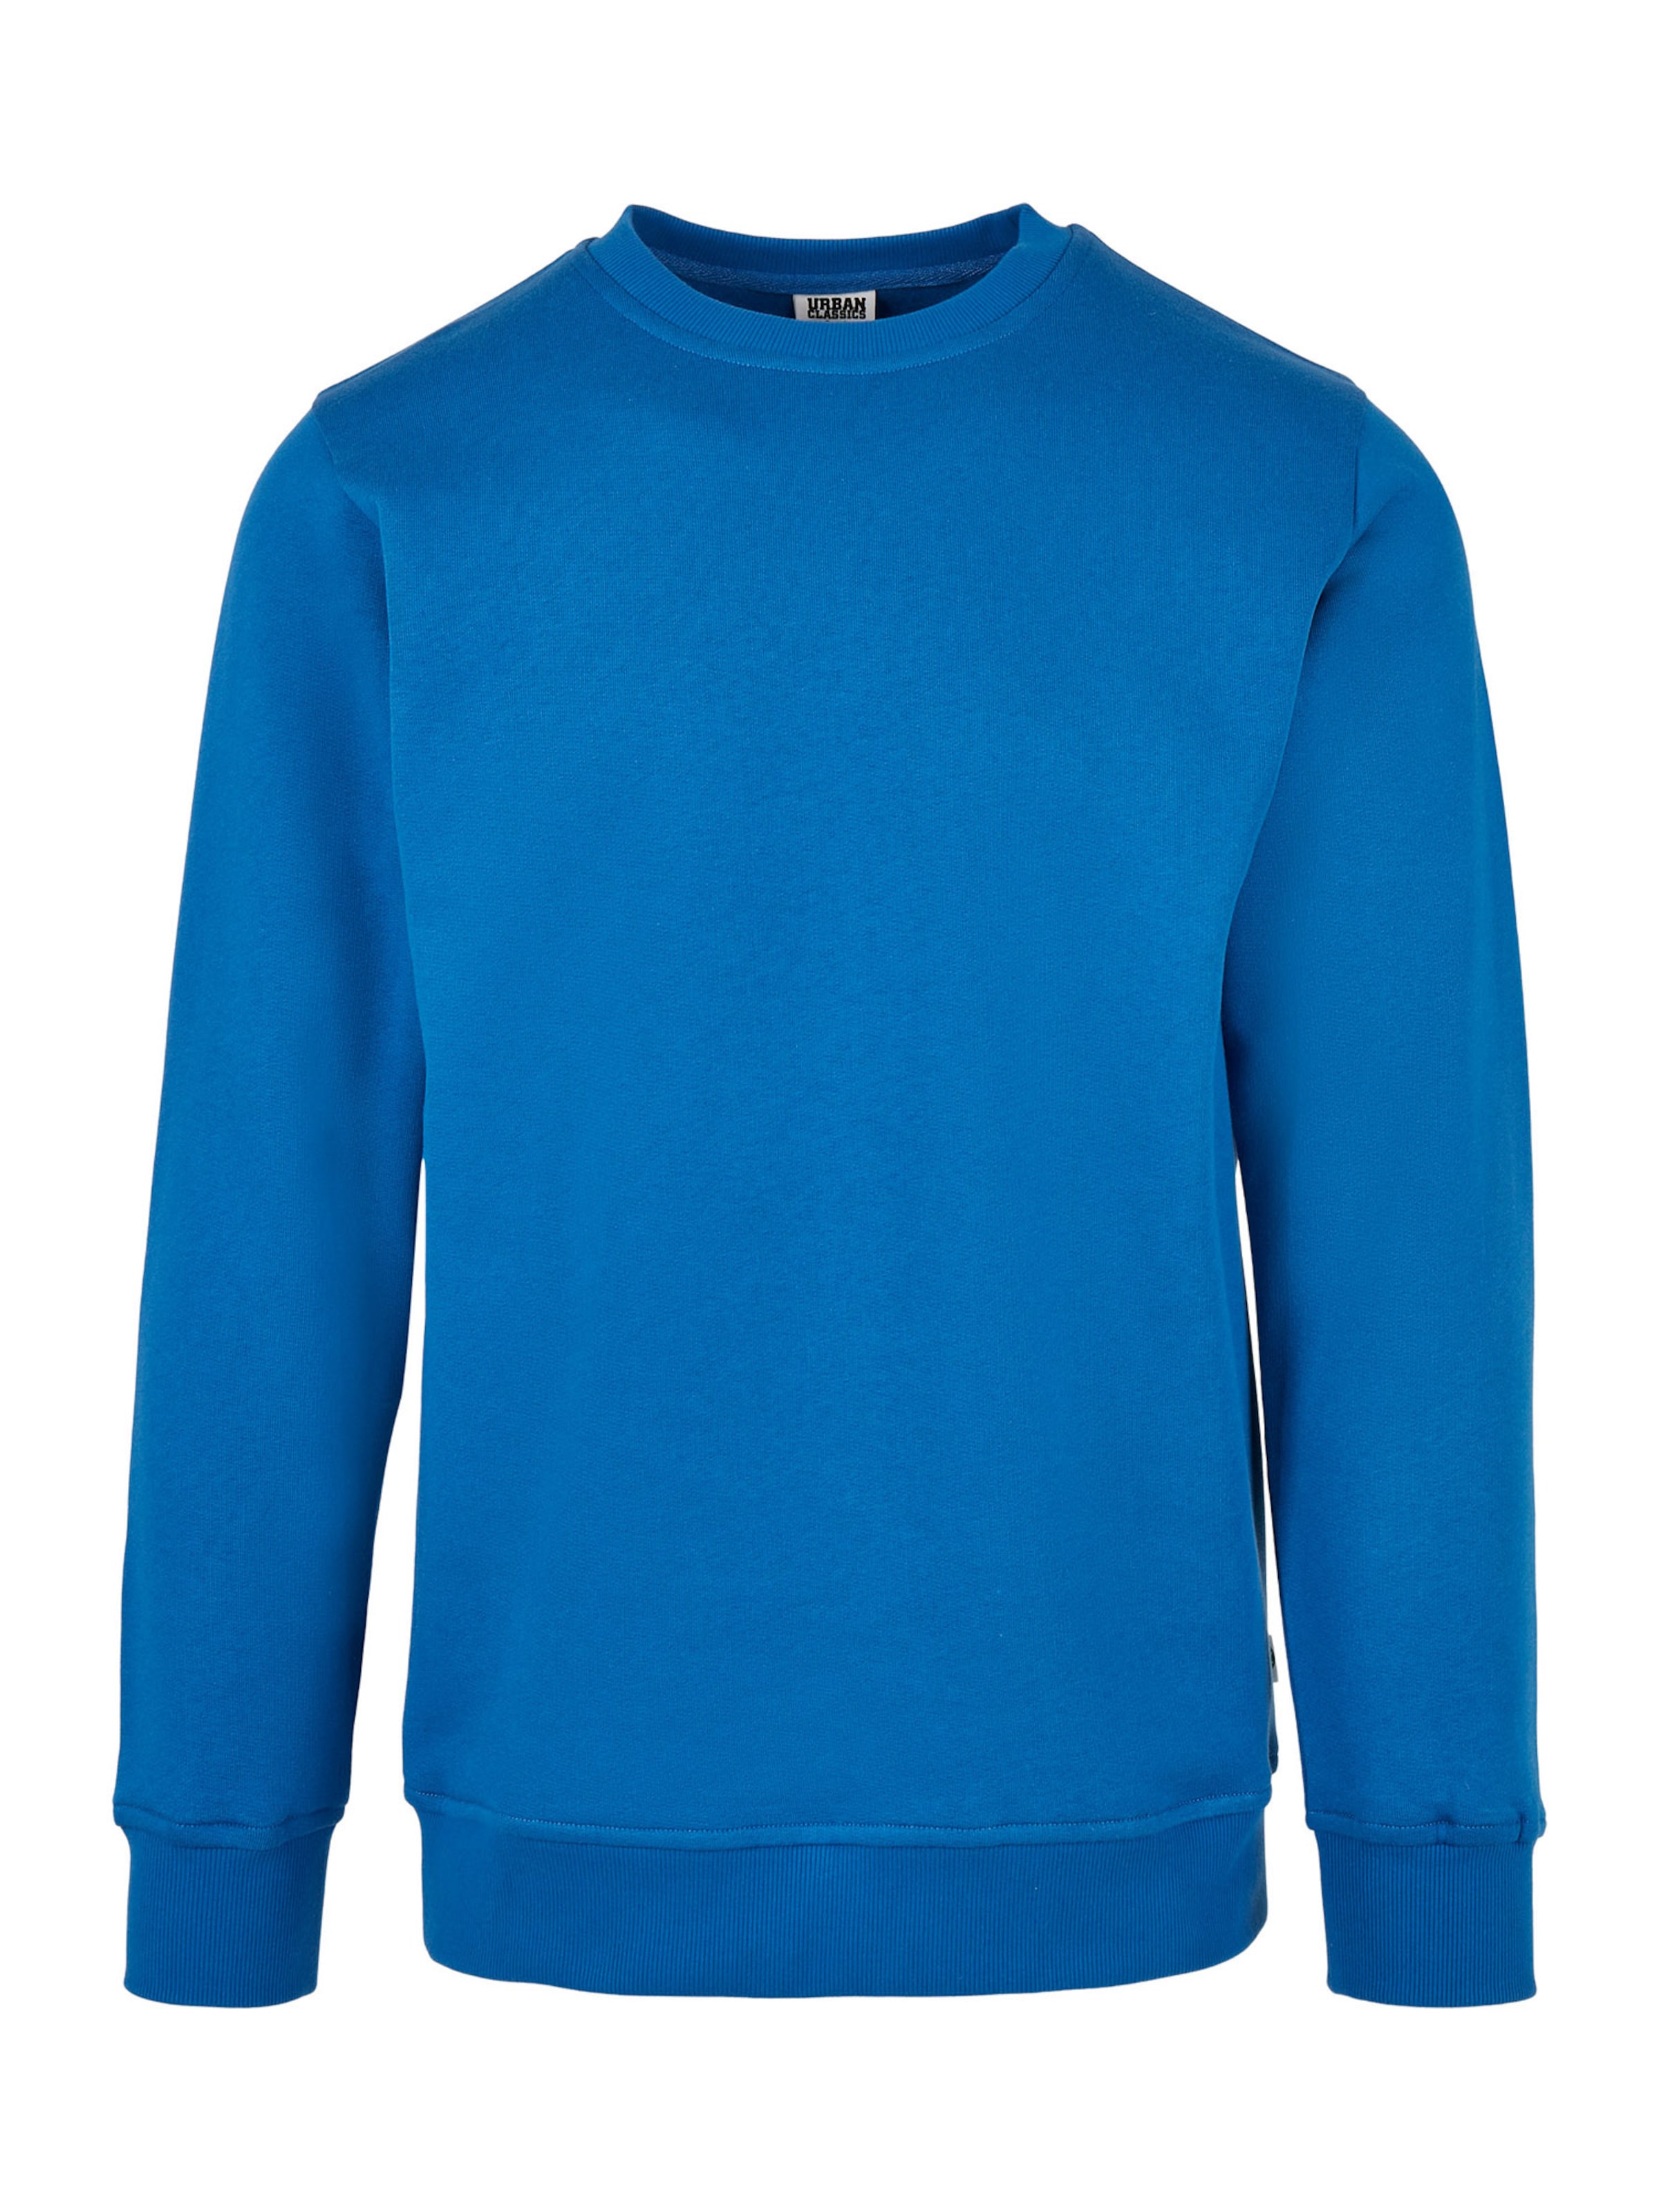 Men Plus sizes | Urban Classics Sweatshirt in Sky Blue - NP00611